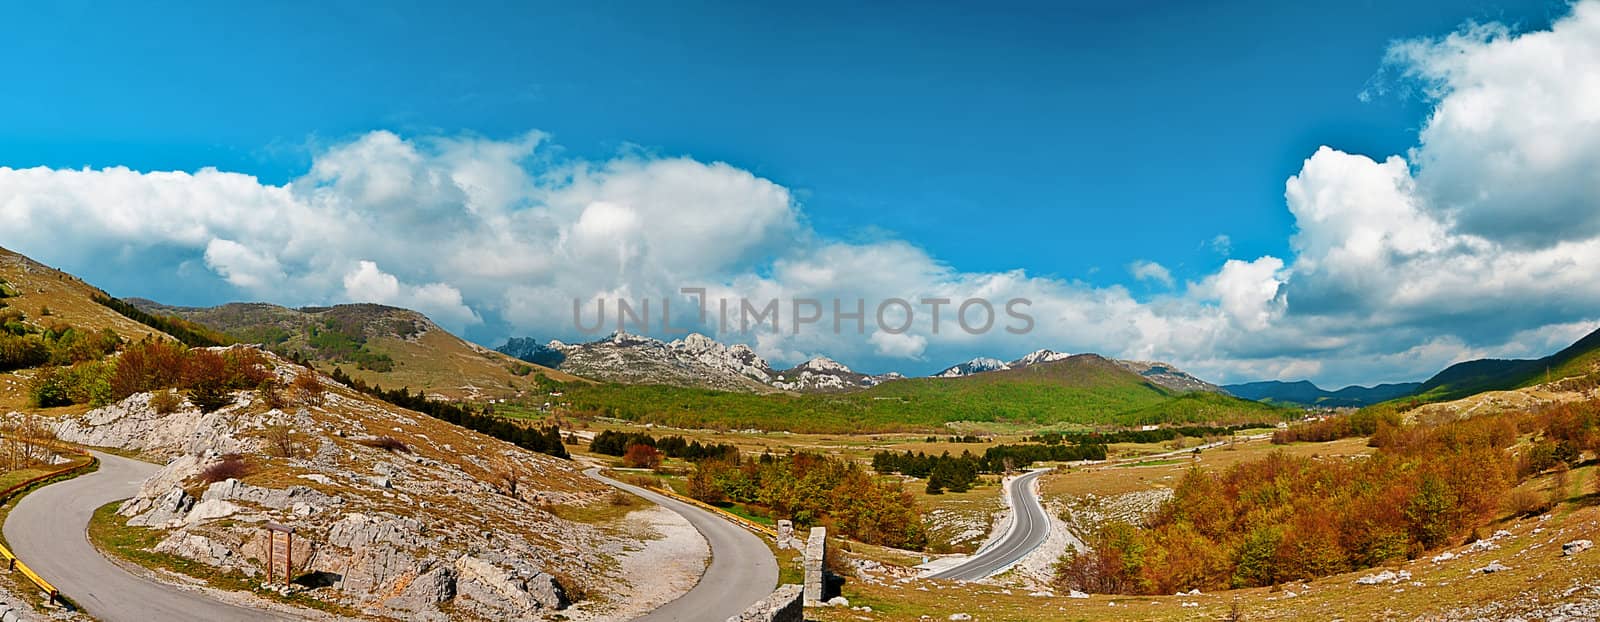 Panorama of a mountain pass by Lamarinx